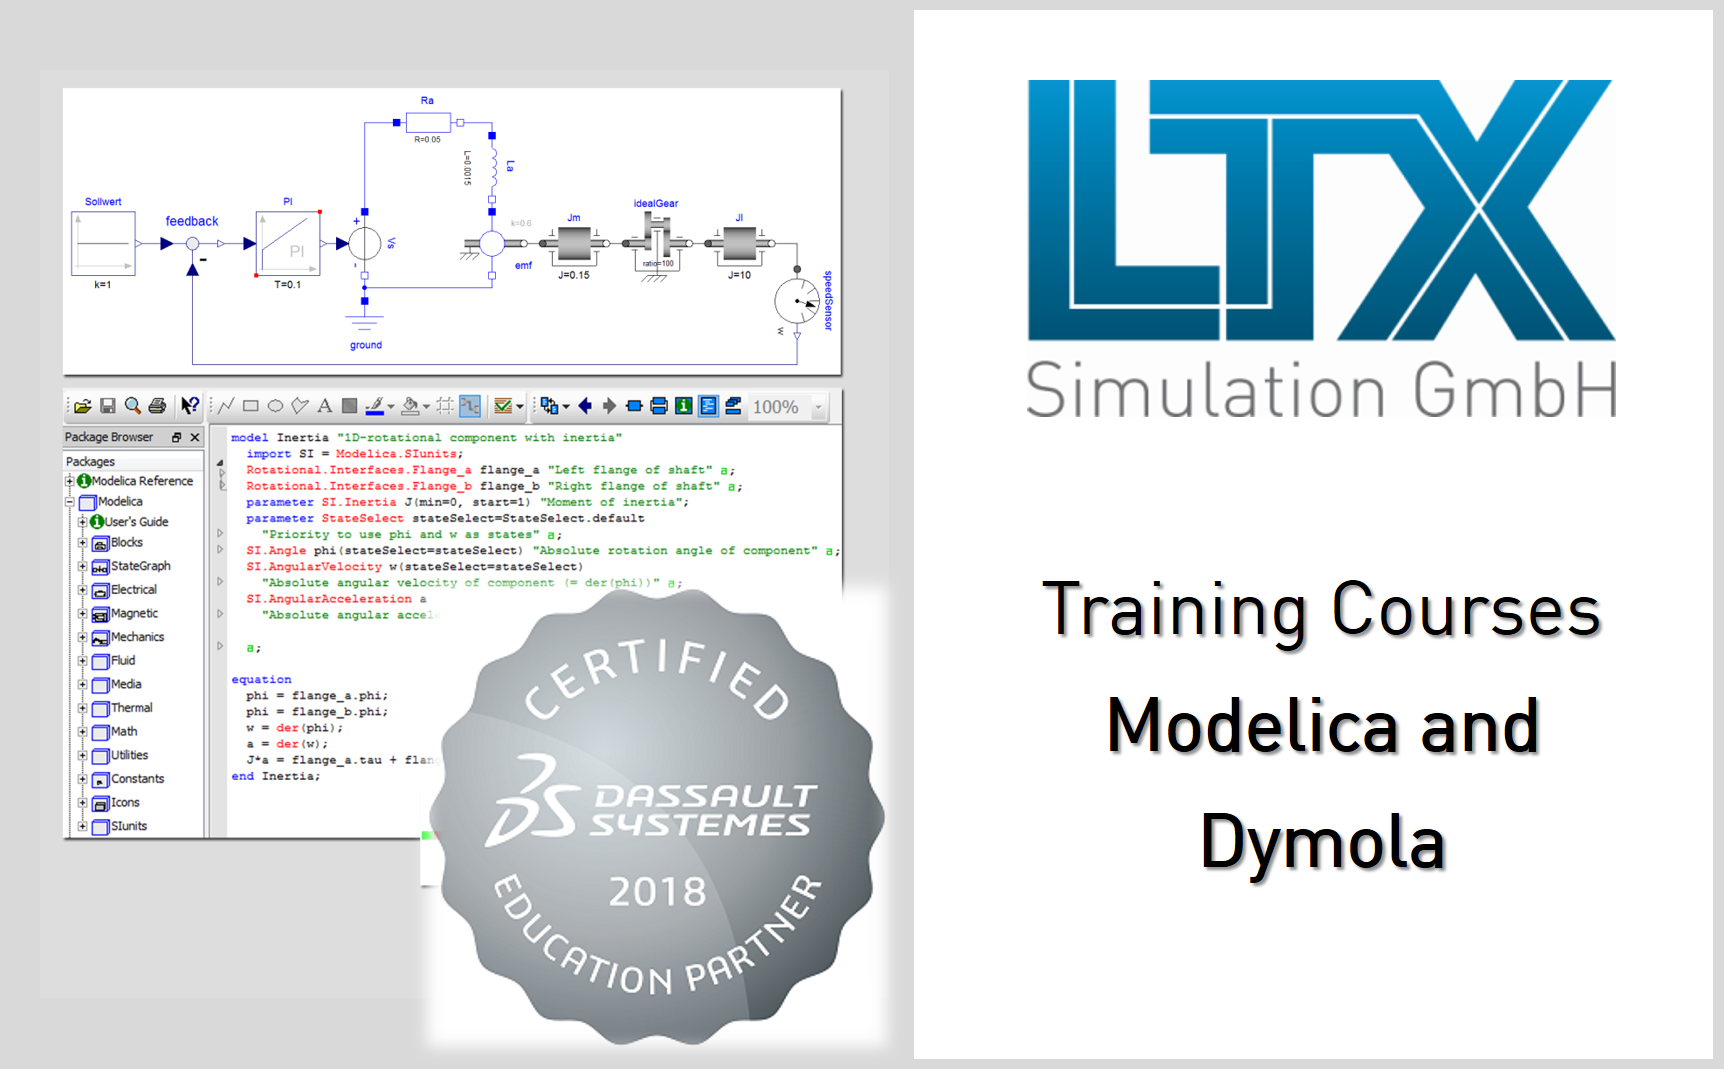 ltx training image